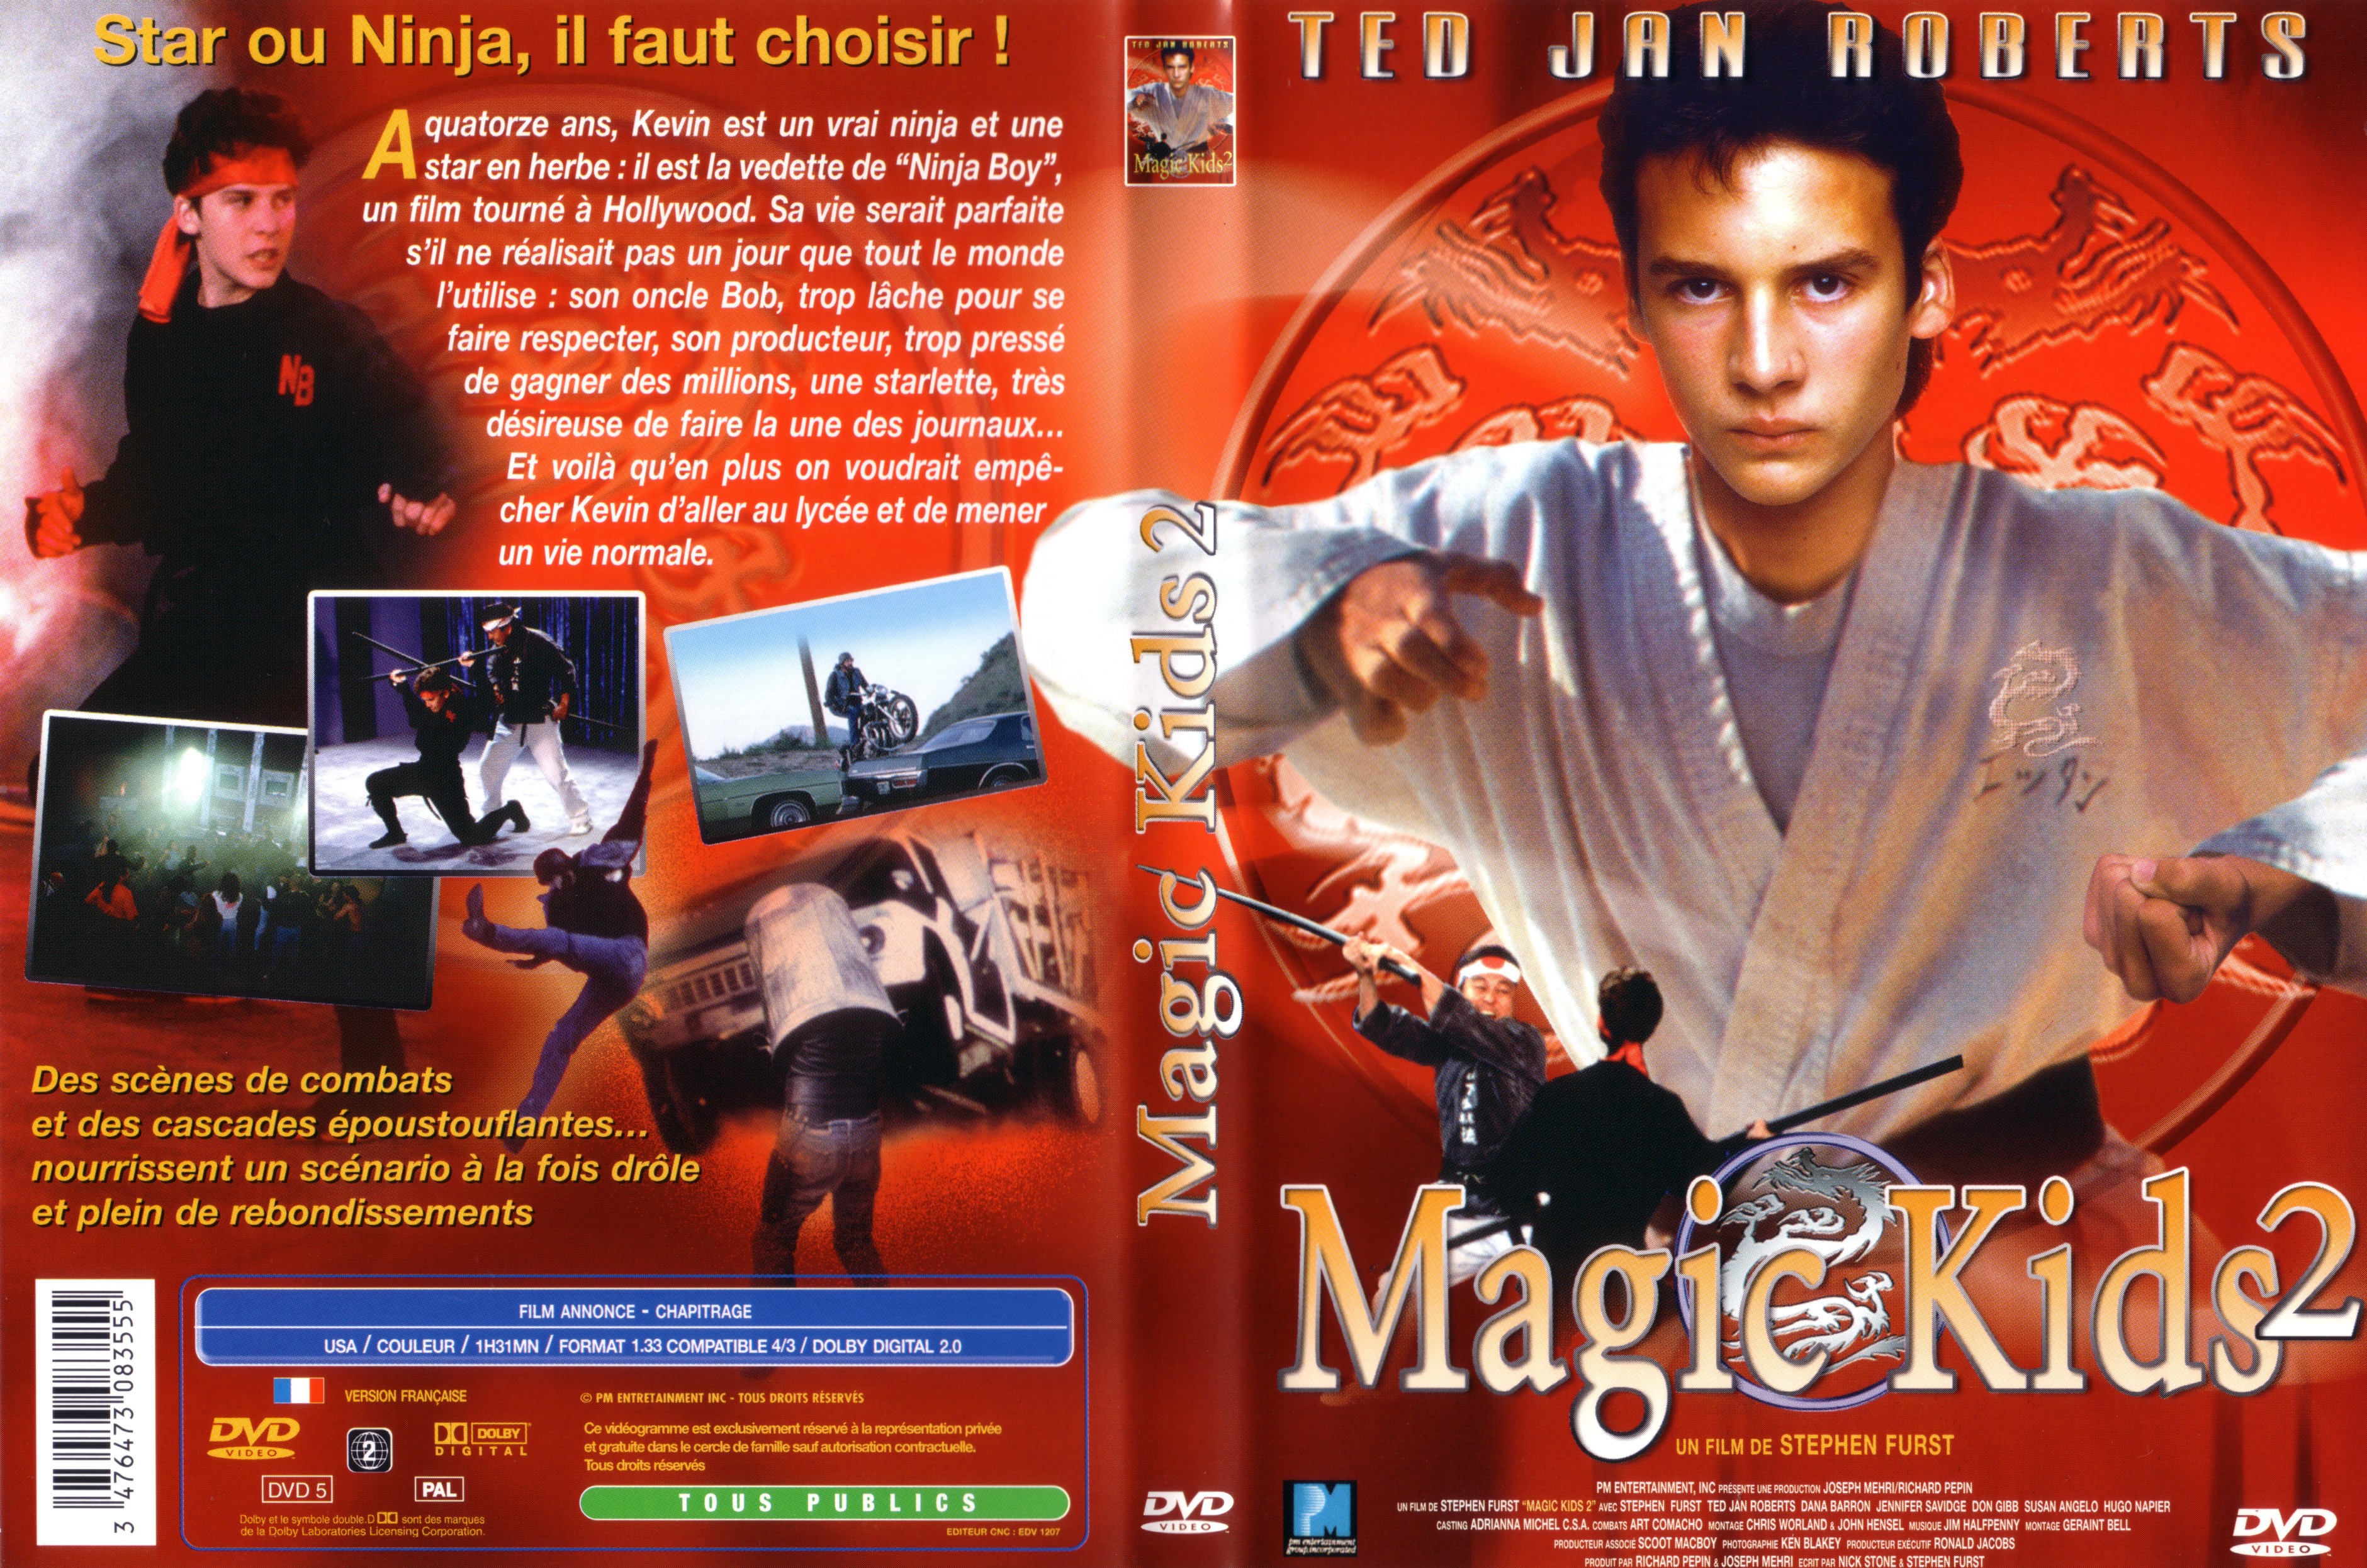 Jaquette DVD Magic kids 2